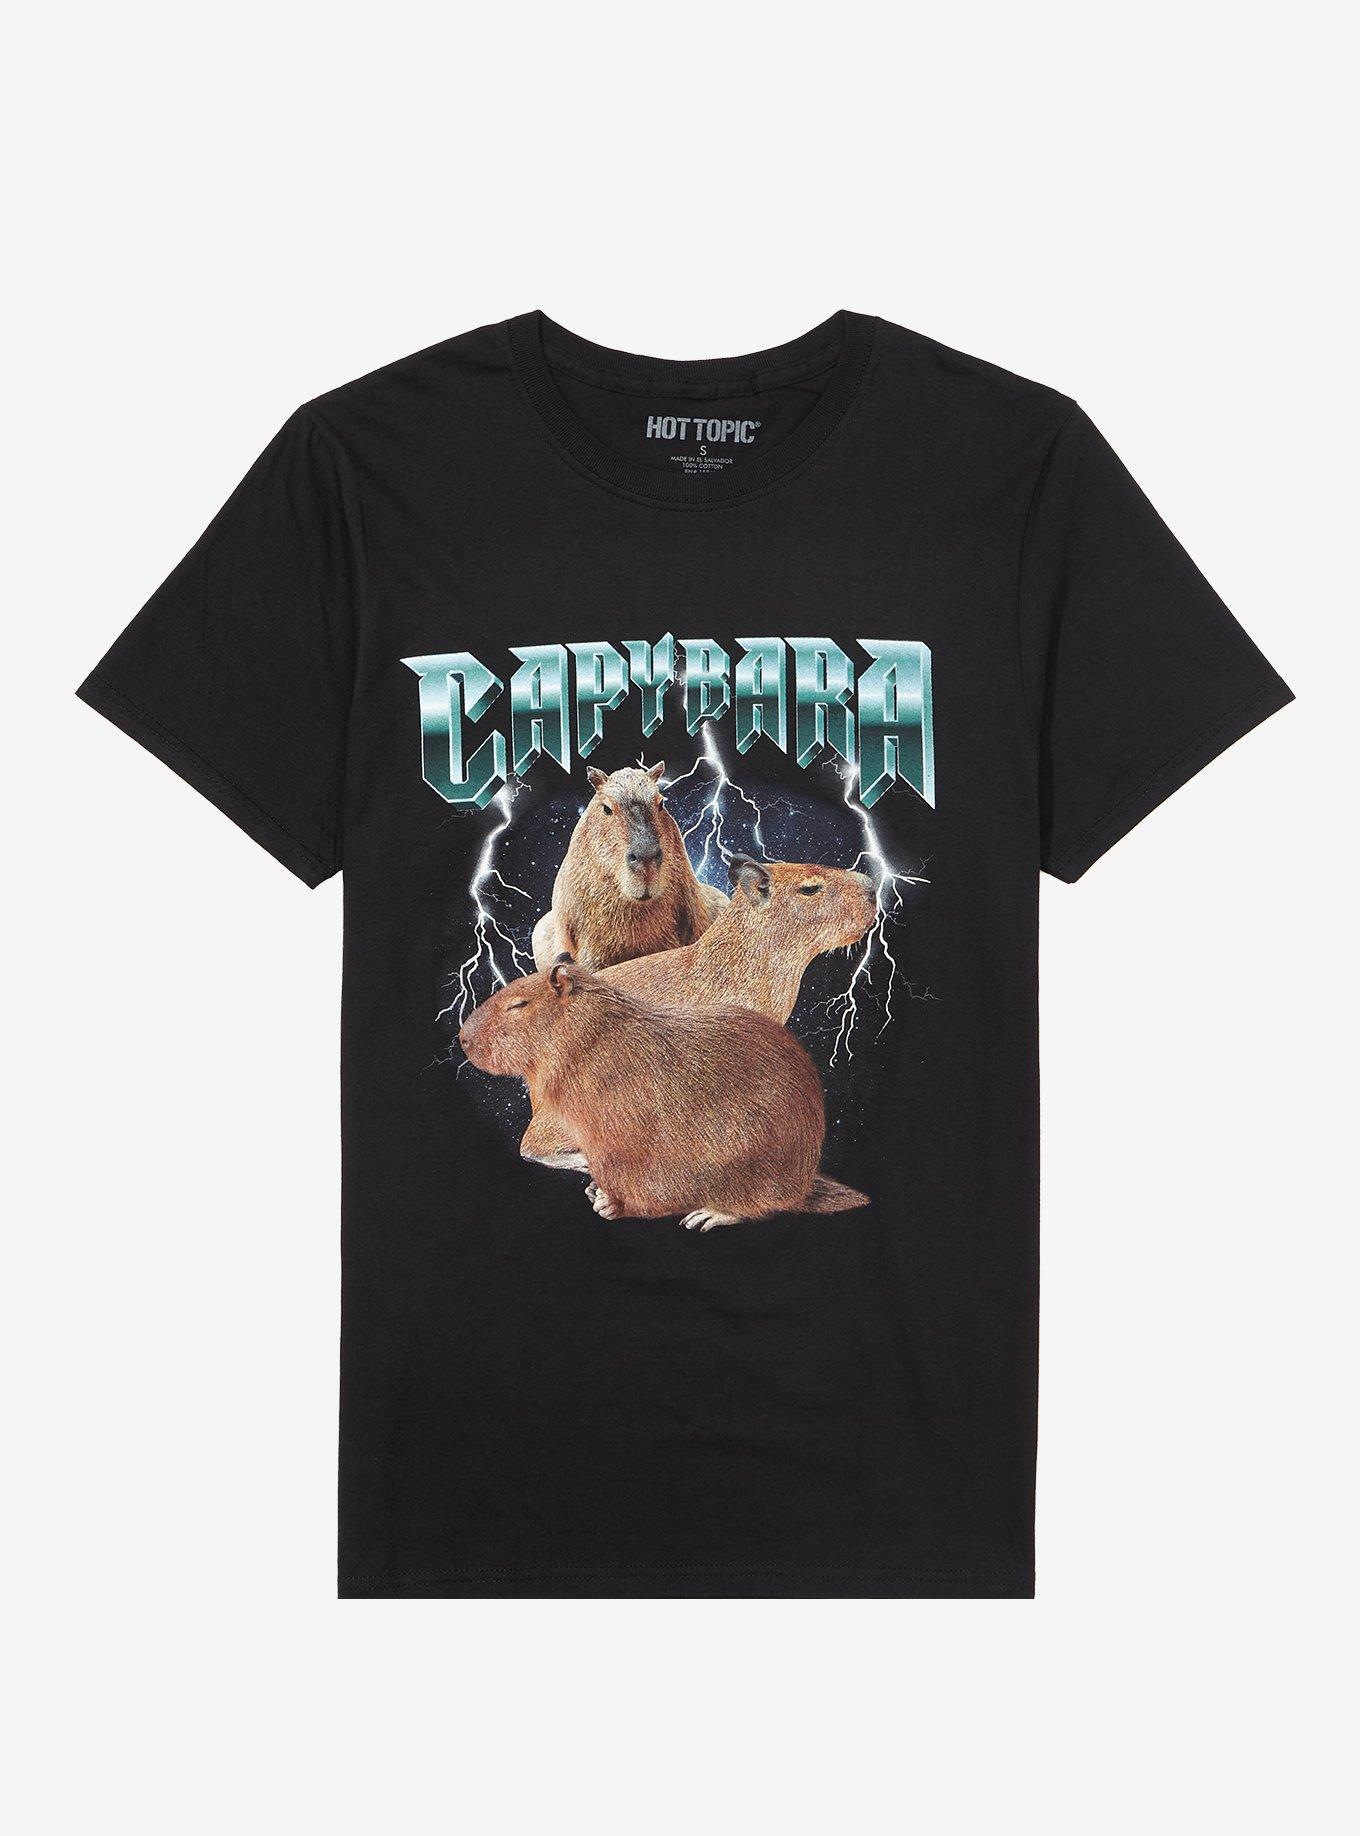 Capybara Metal Boyfriend Fit Girls T-Shirt, MULTI, hi-res